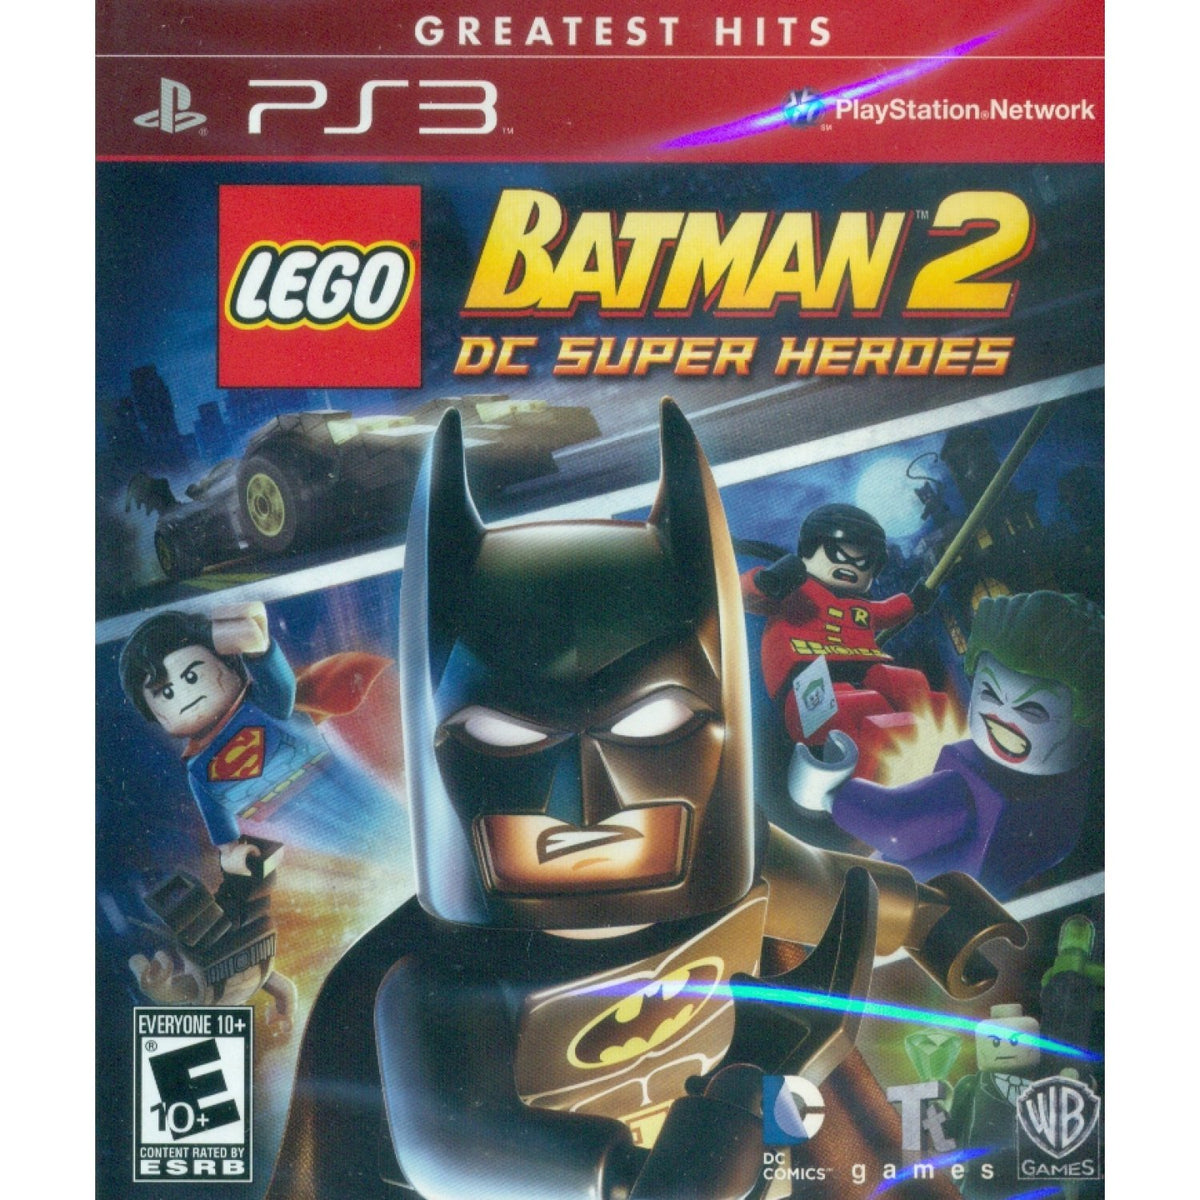 LEGO Batman 2: DC Super Heroes - PS3 (GREATEST HITS) — 